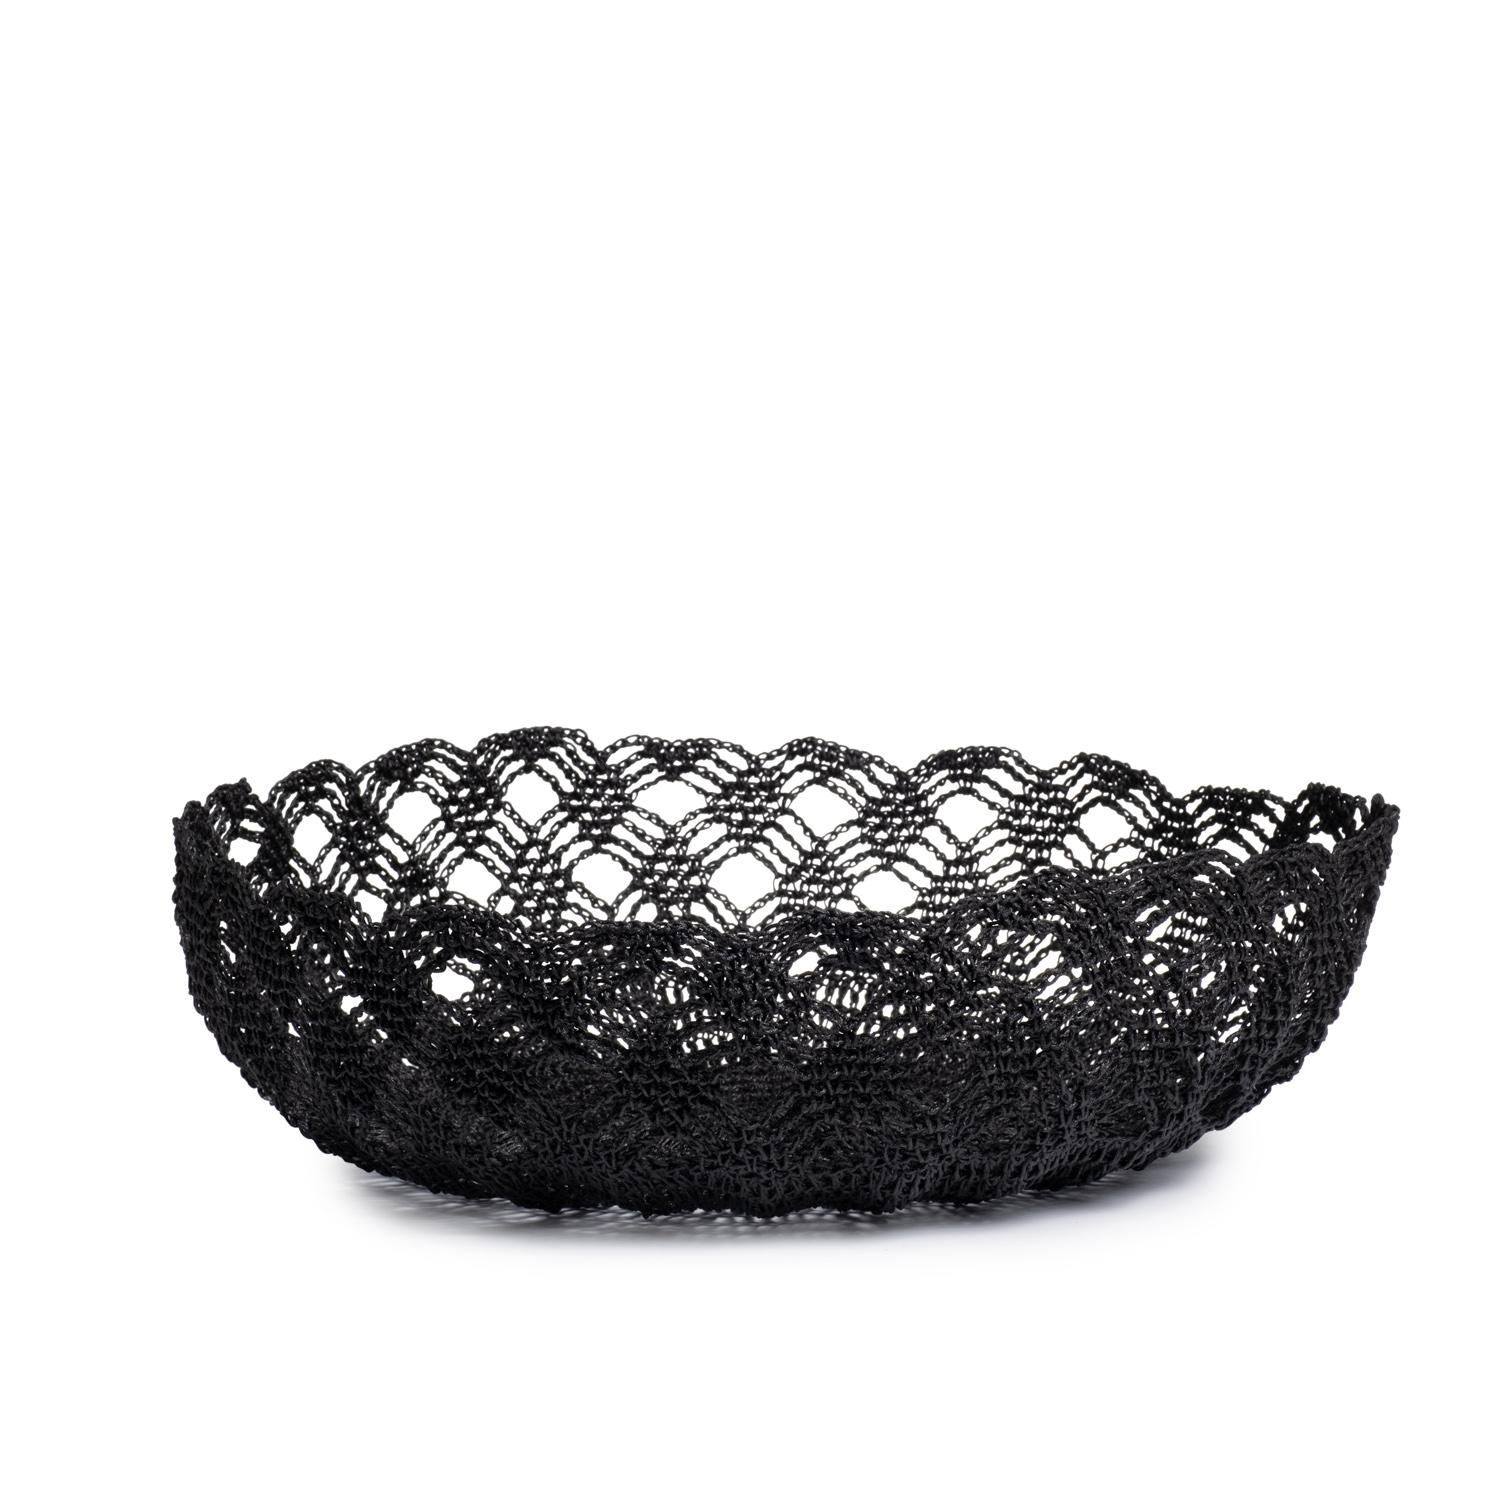 Crocheted Mesh Bowl - Black